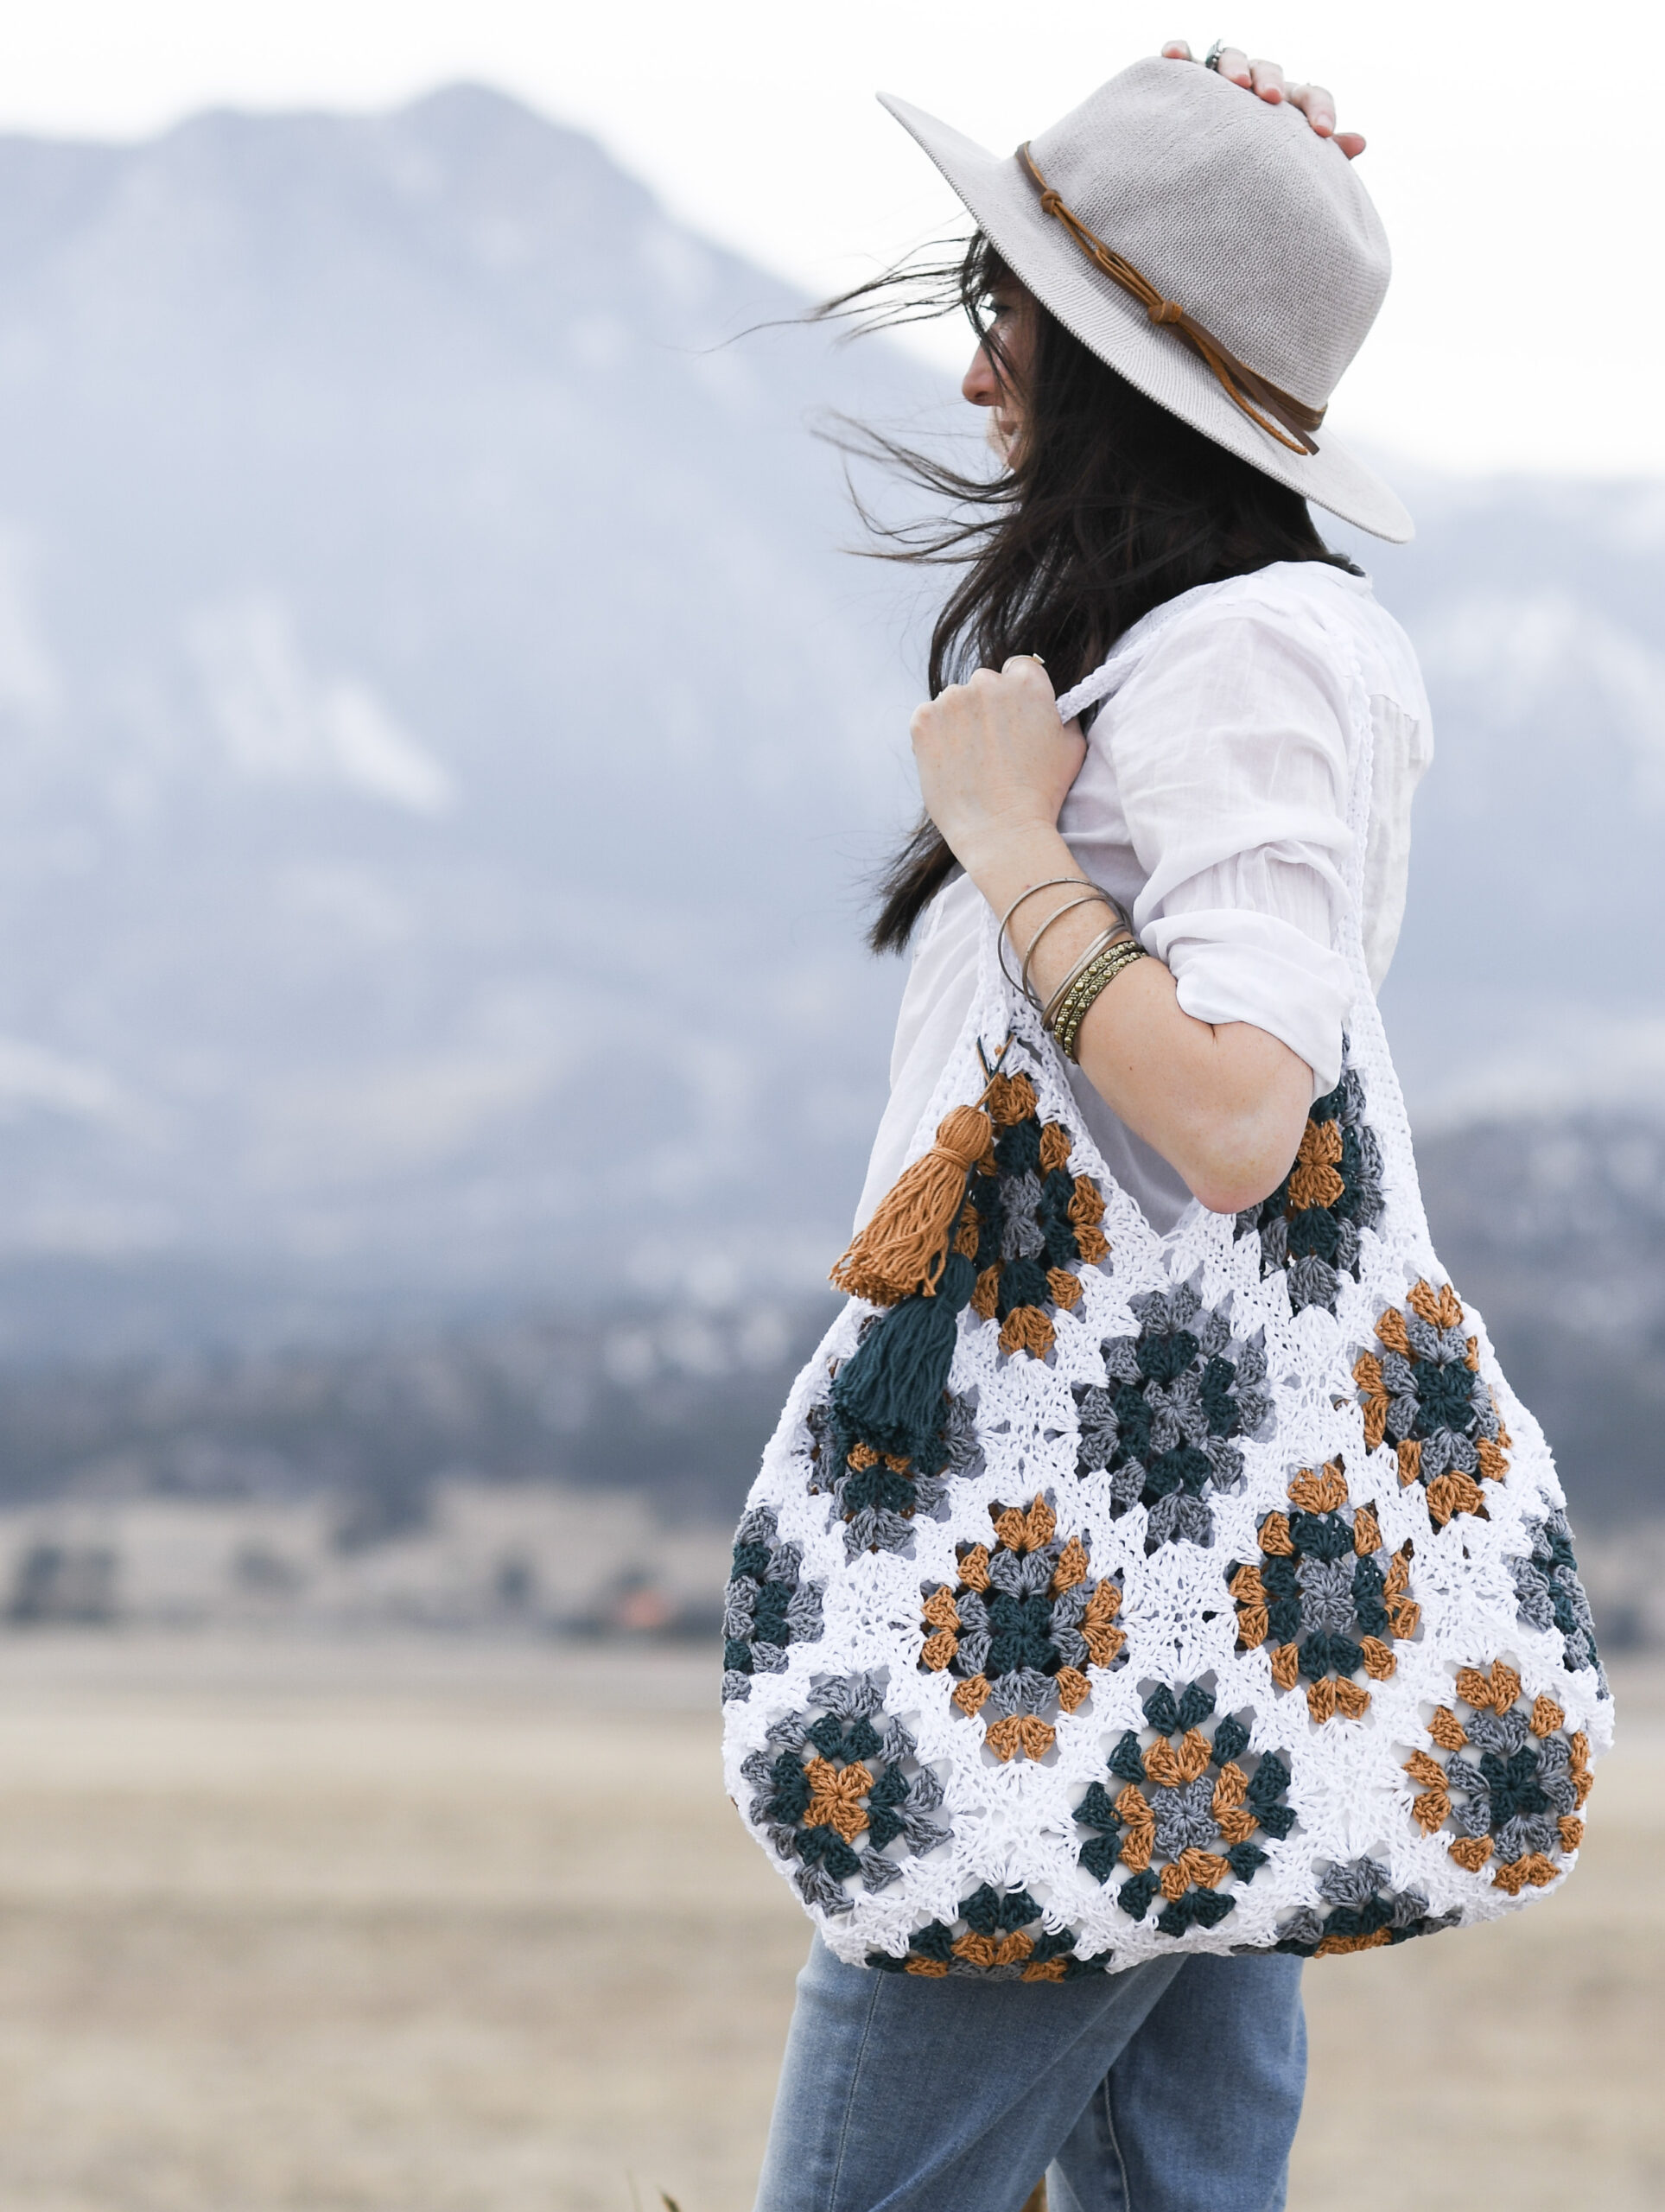 Granny Square Crochet Bag Pattern - Julie Measures